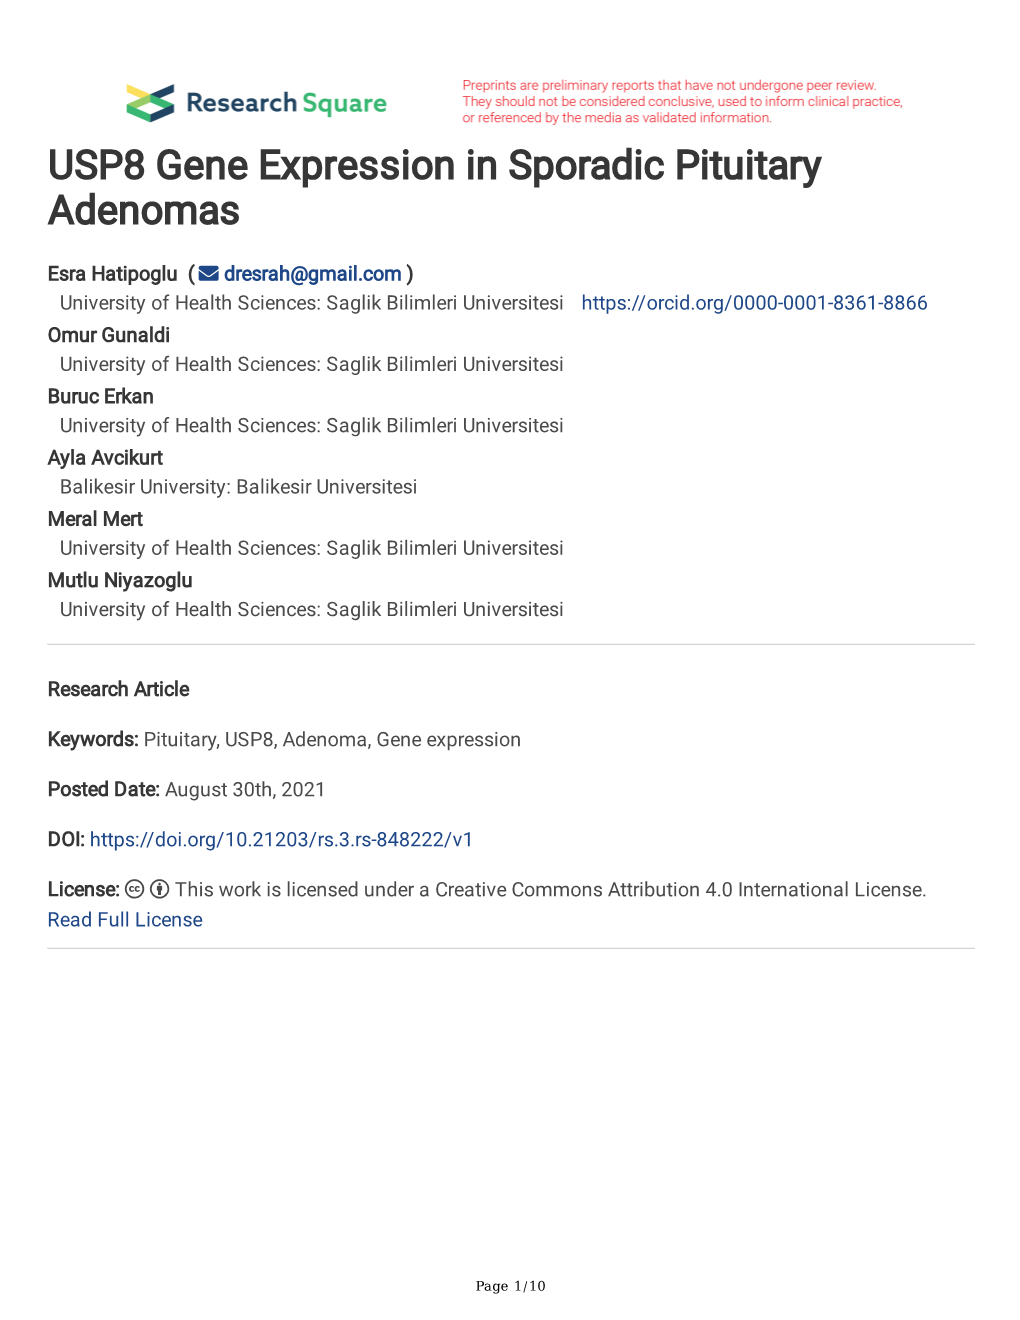 USP8 Gene Expression in Sporadic Pituitary Adenomas